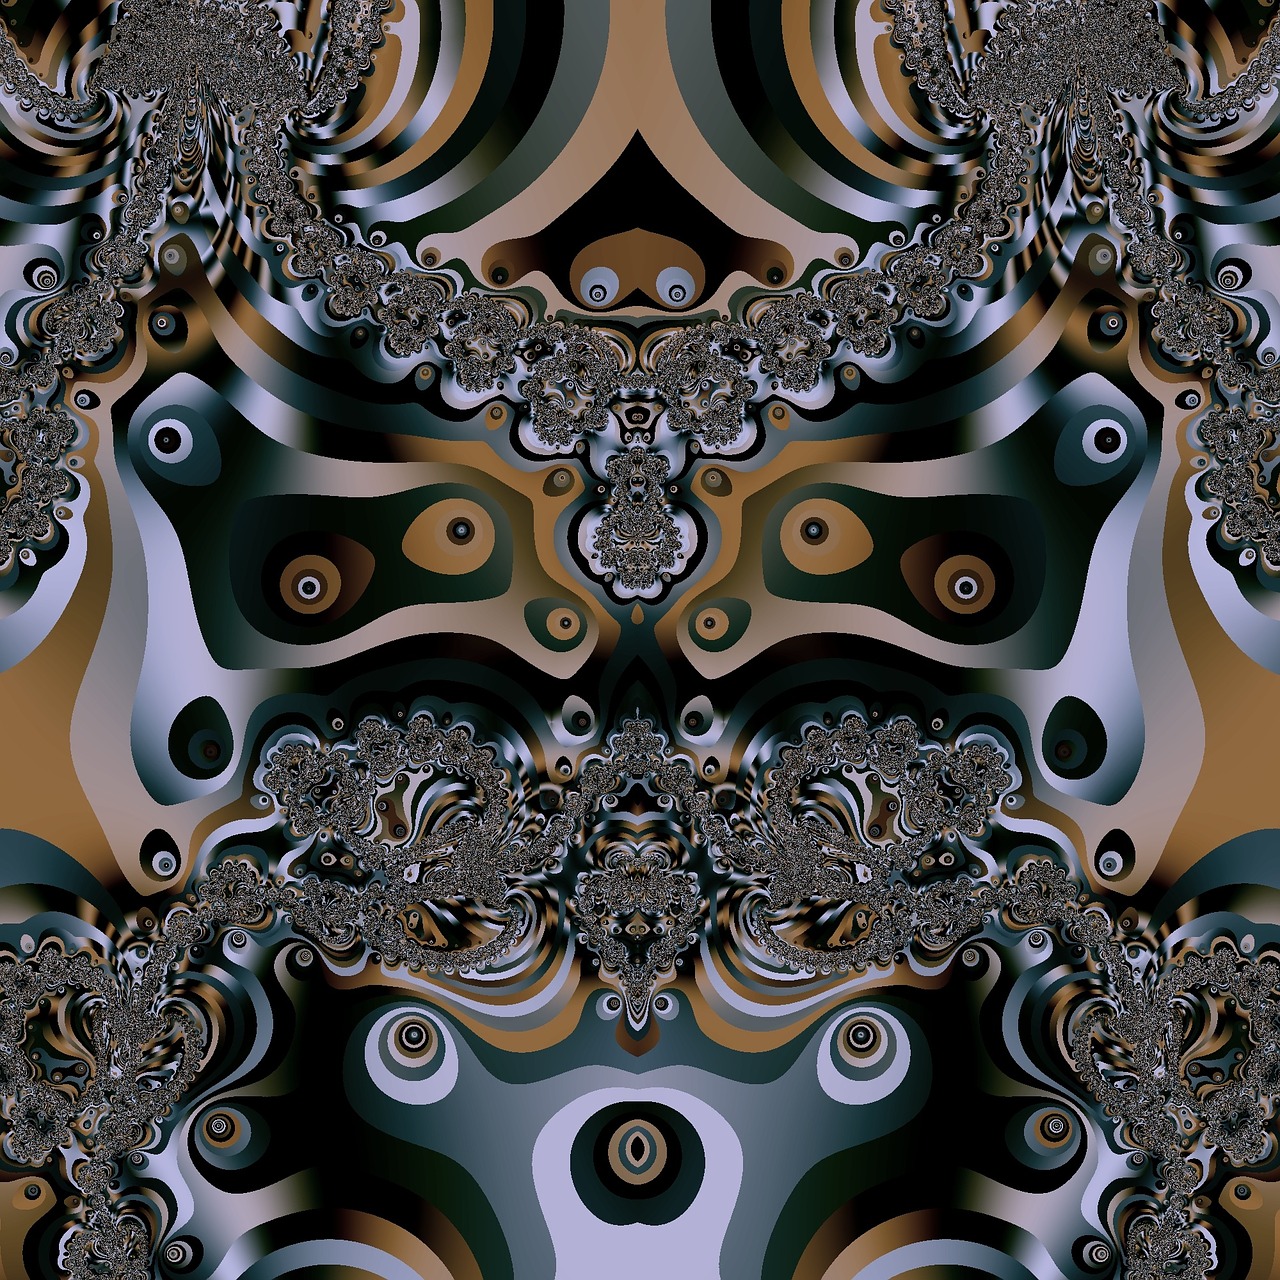 fractal art artwork free photo